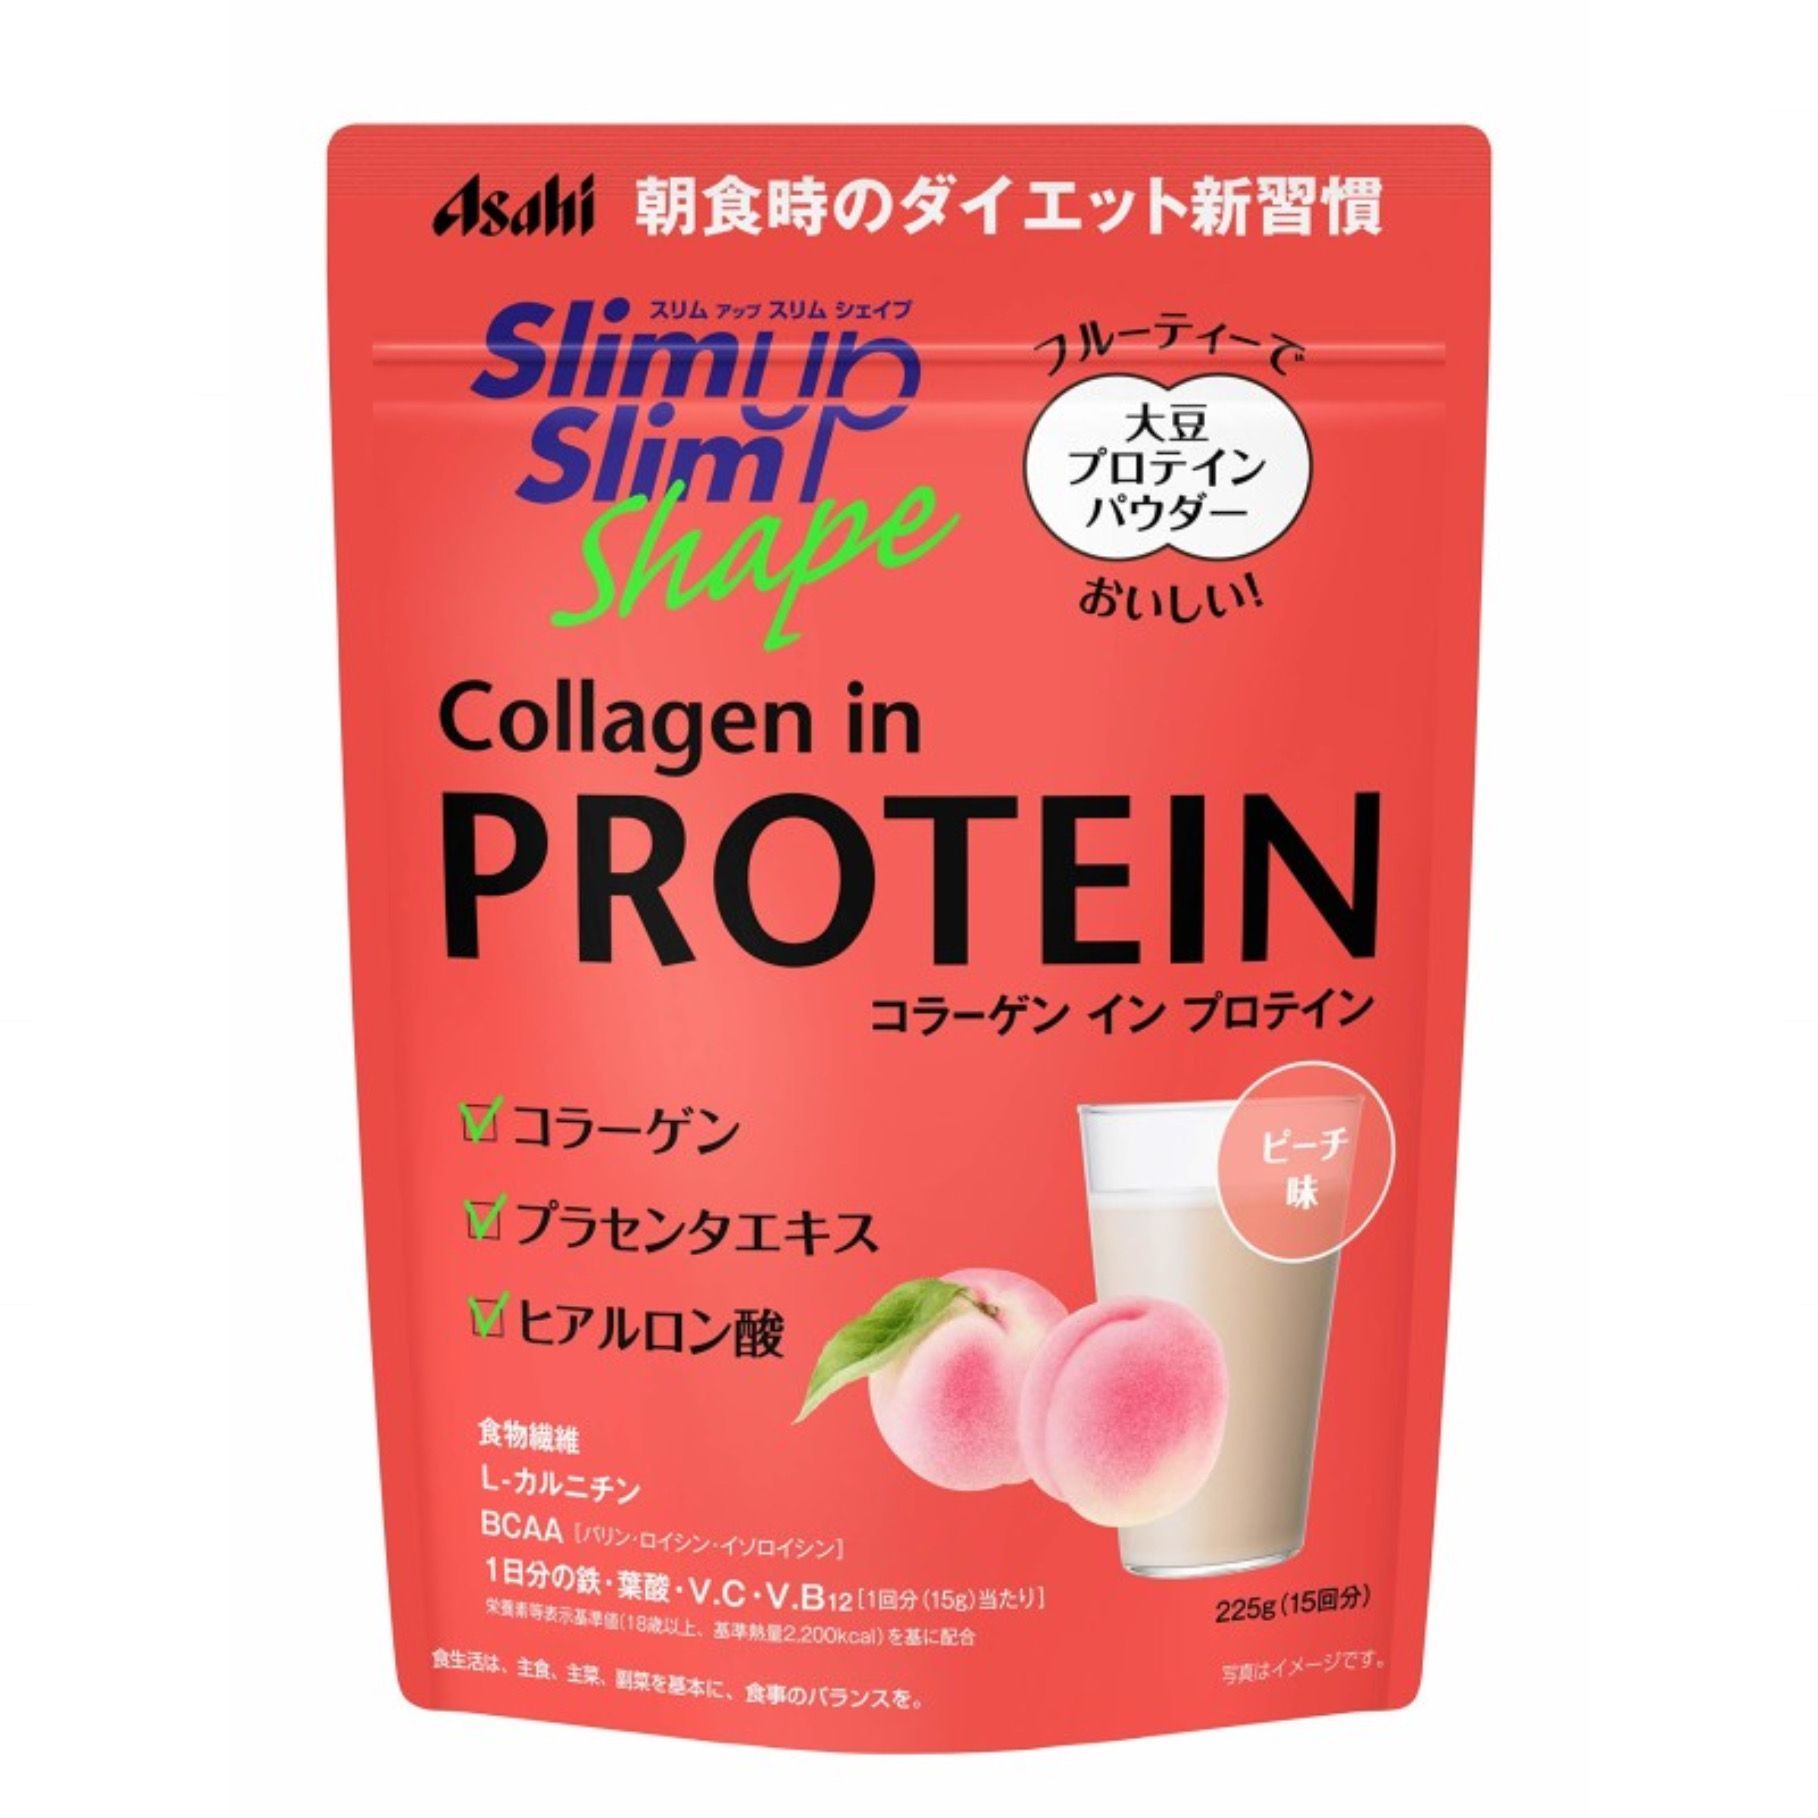 Коктейль с коллагеном. Коллаген протеин Slim up. Протеин японский slimup Asahi. Японский коллаген в таблетках со вкусом персика. Коллаген коктейль.